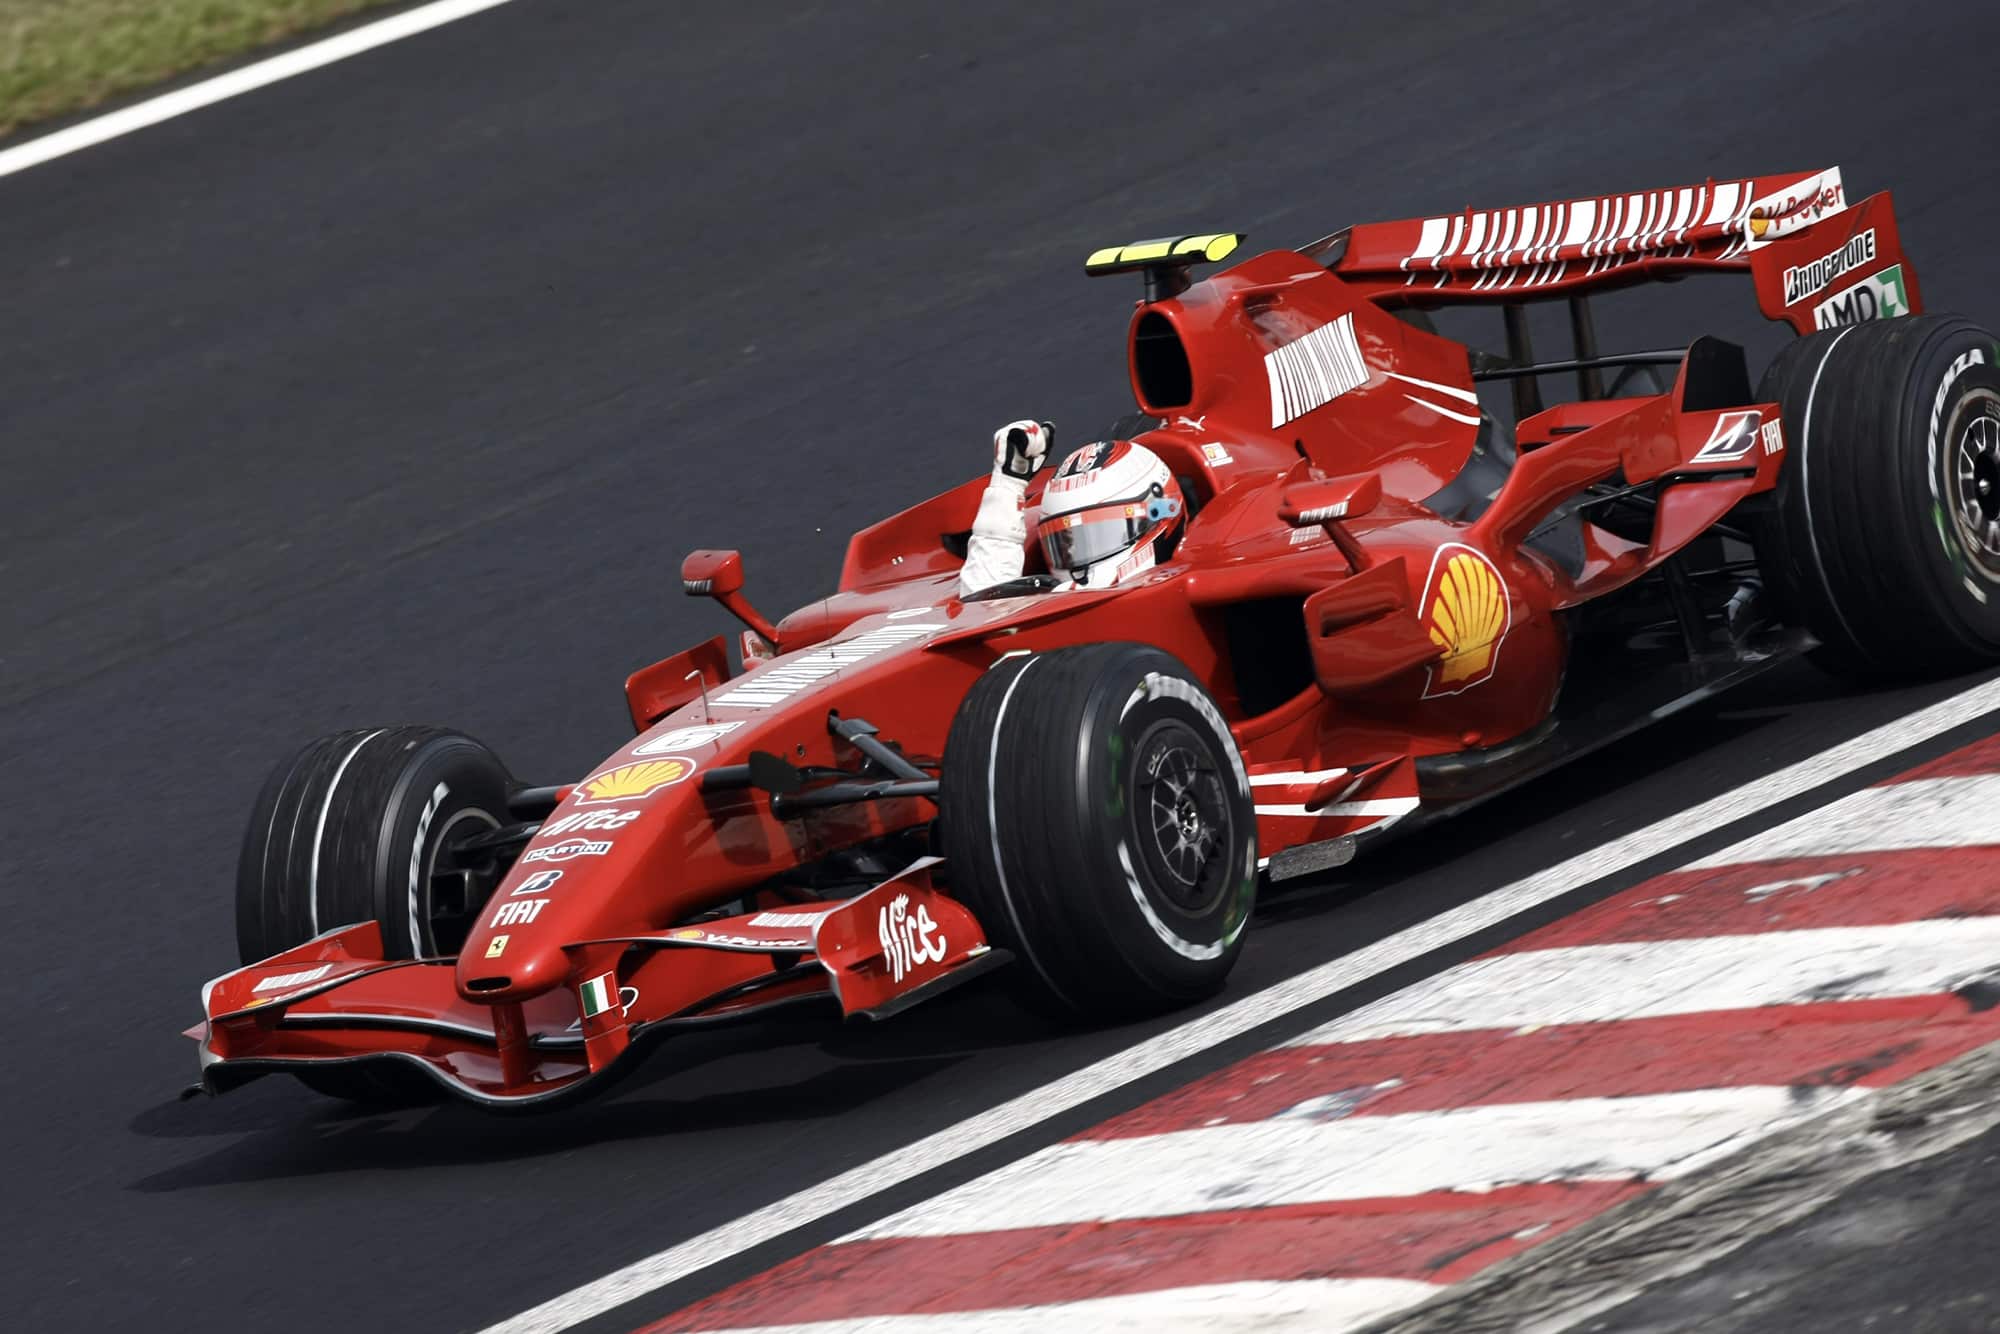 Kimi Raikkonen in his Ferrari after winning the 2007 Formula 1 world championship